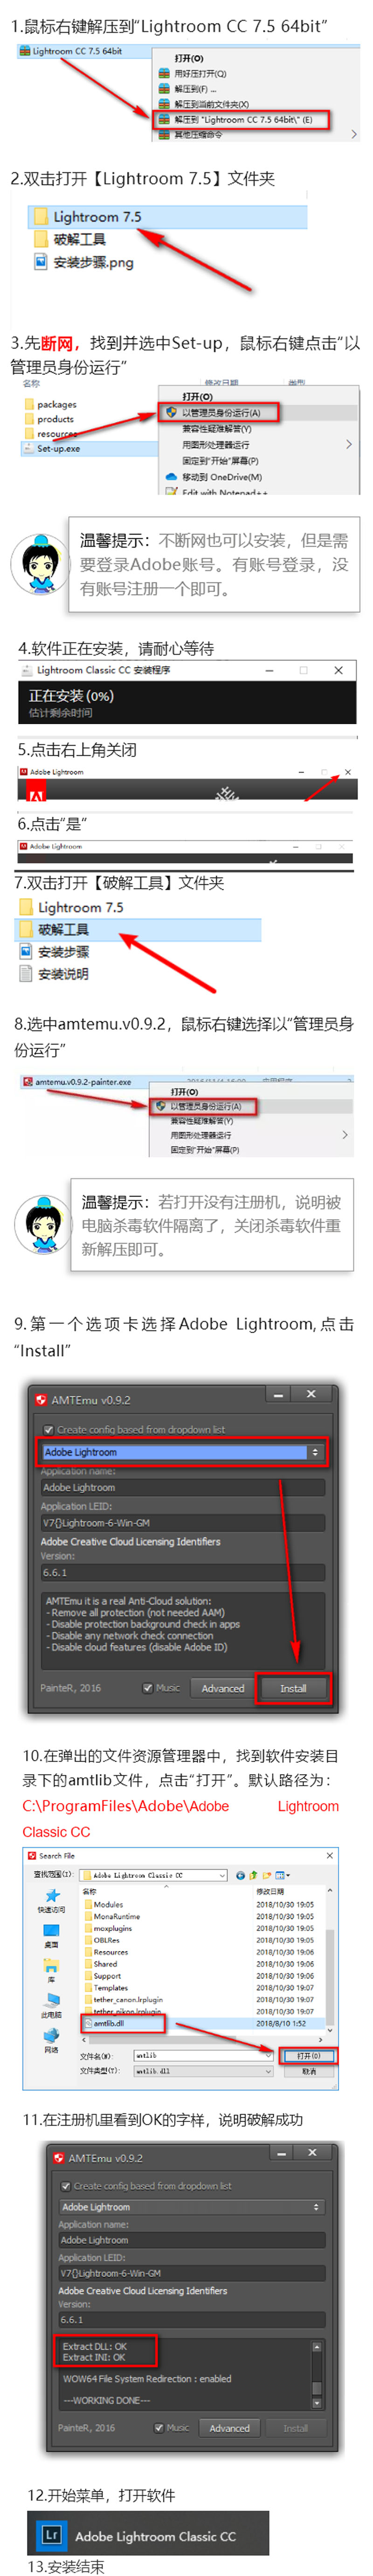 Adobe Photoshop  Lightroom7.5װ̳.jpg